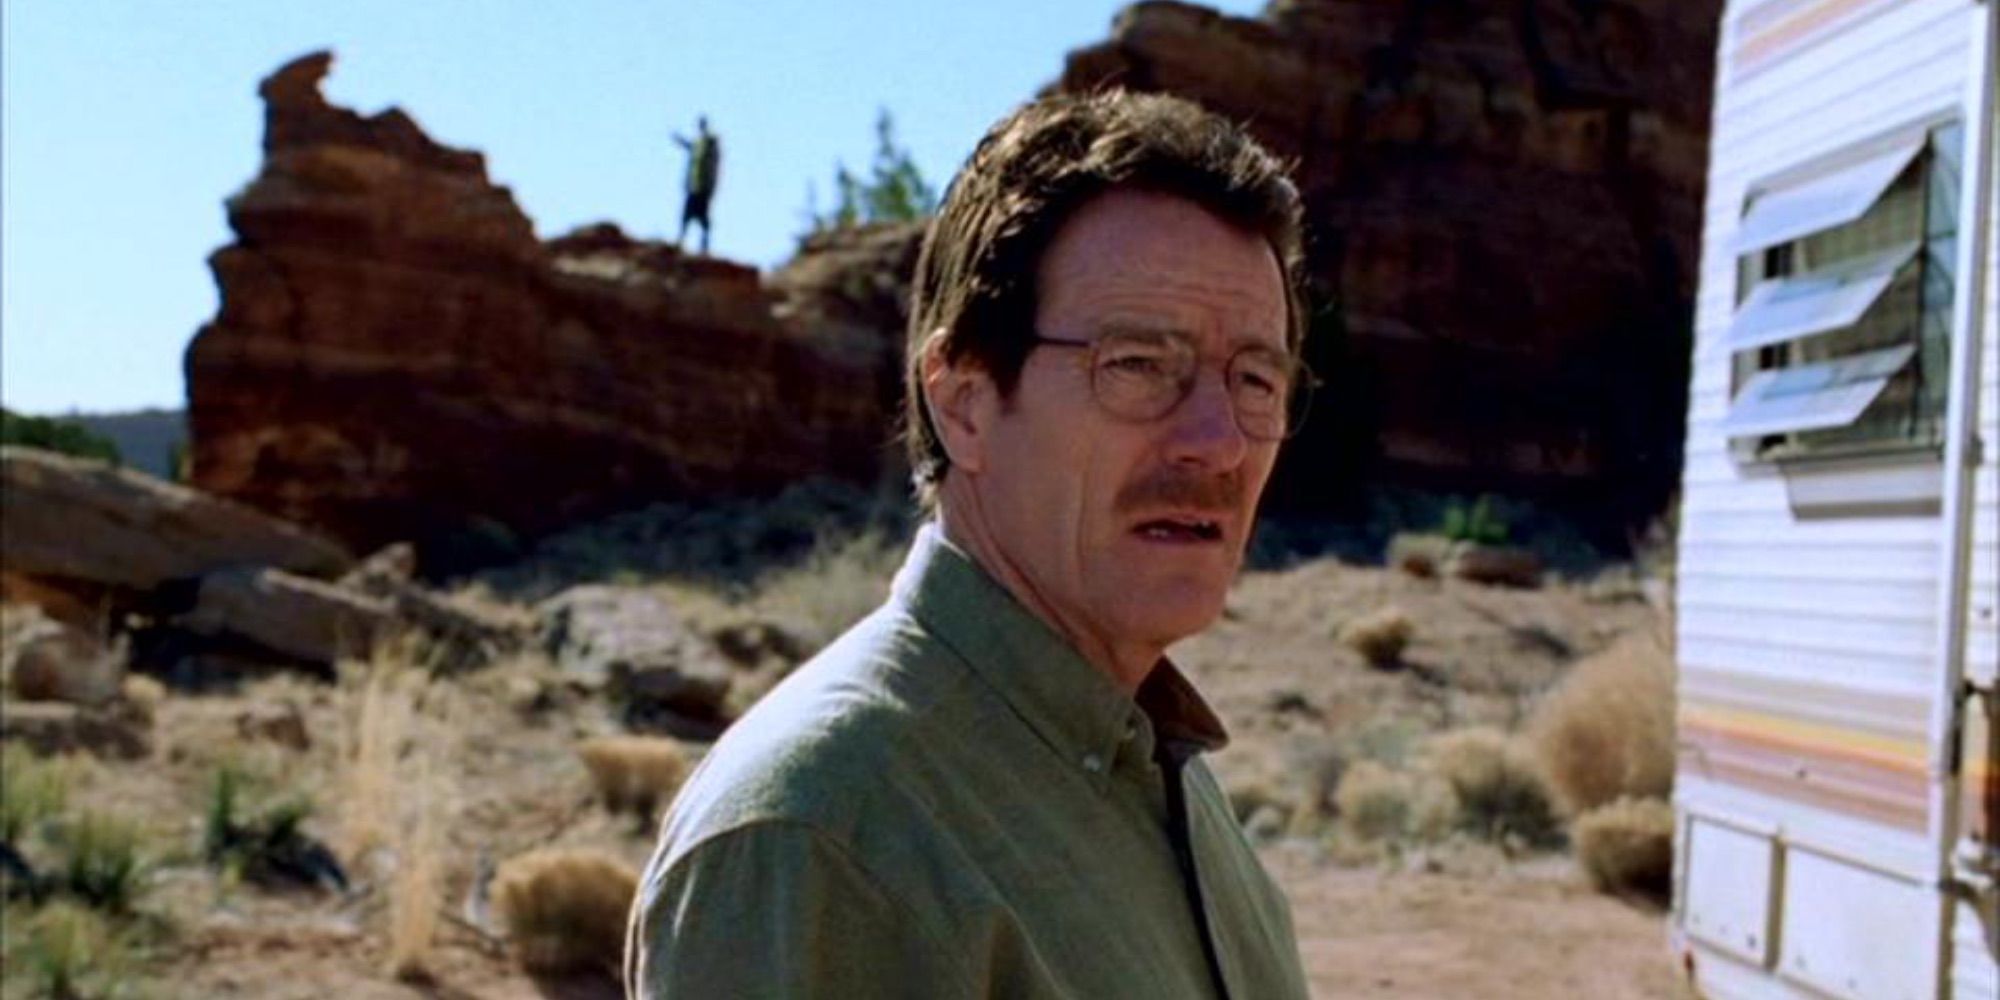 Walter White standing in the desert outside the RV in the pilot of Breaking Bad